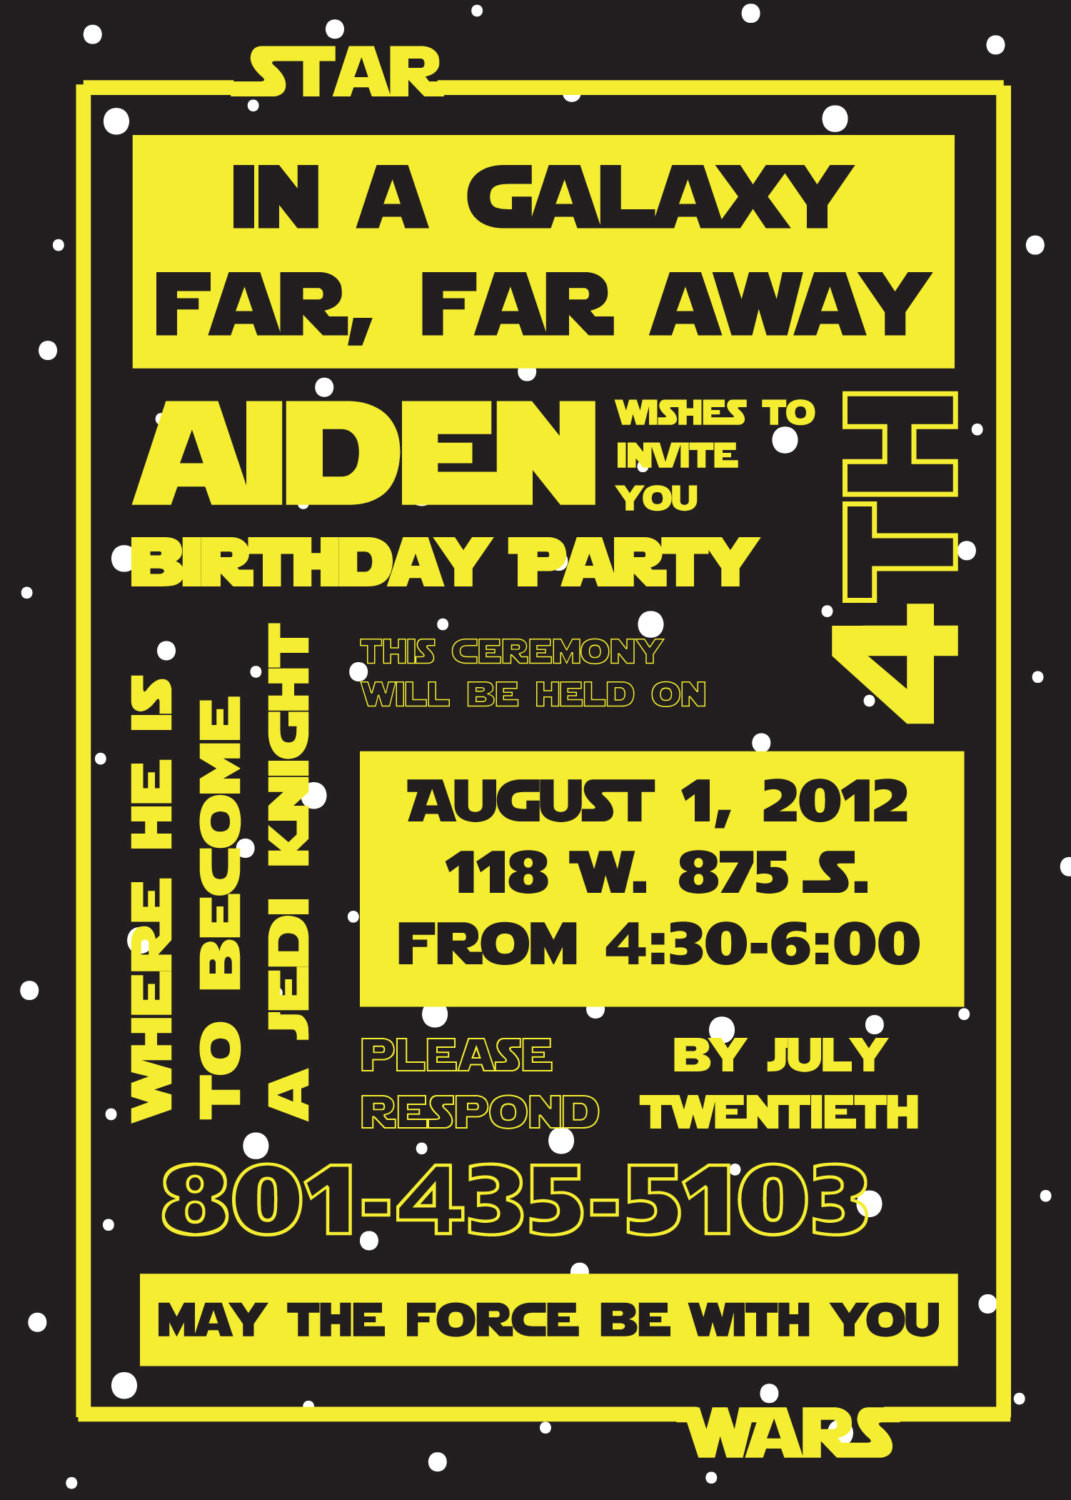 Star Wars Birthday Party Invitation
 Printable Star Wars Invitation and Party Banner by susieandme